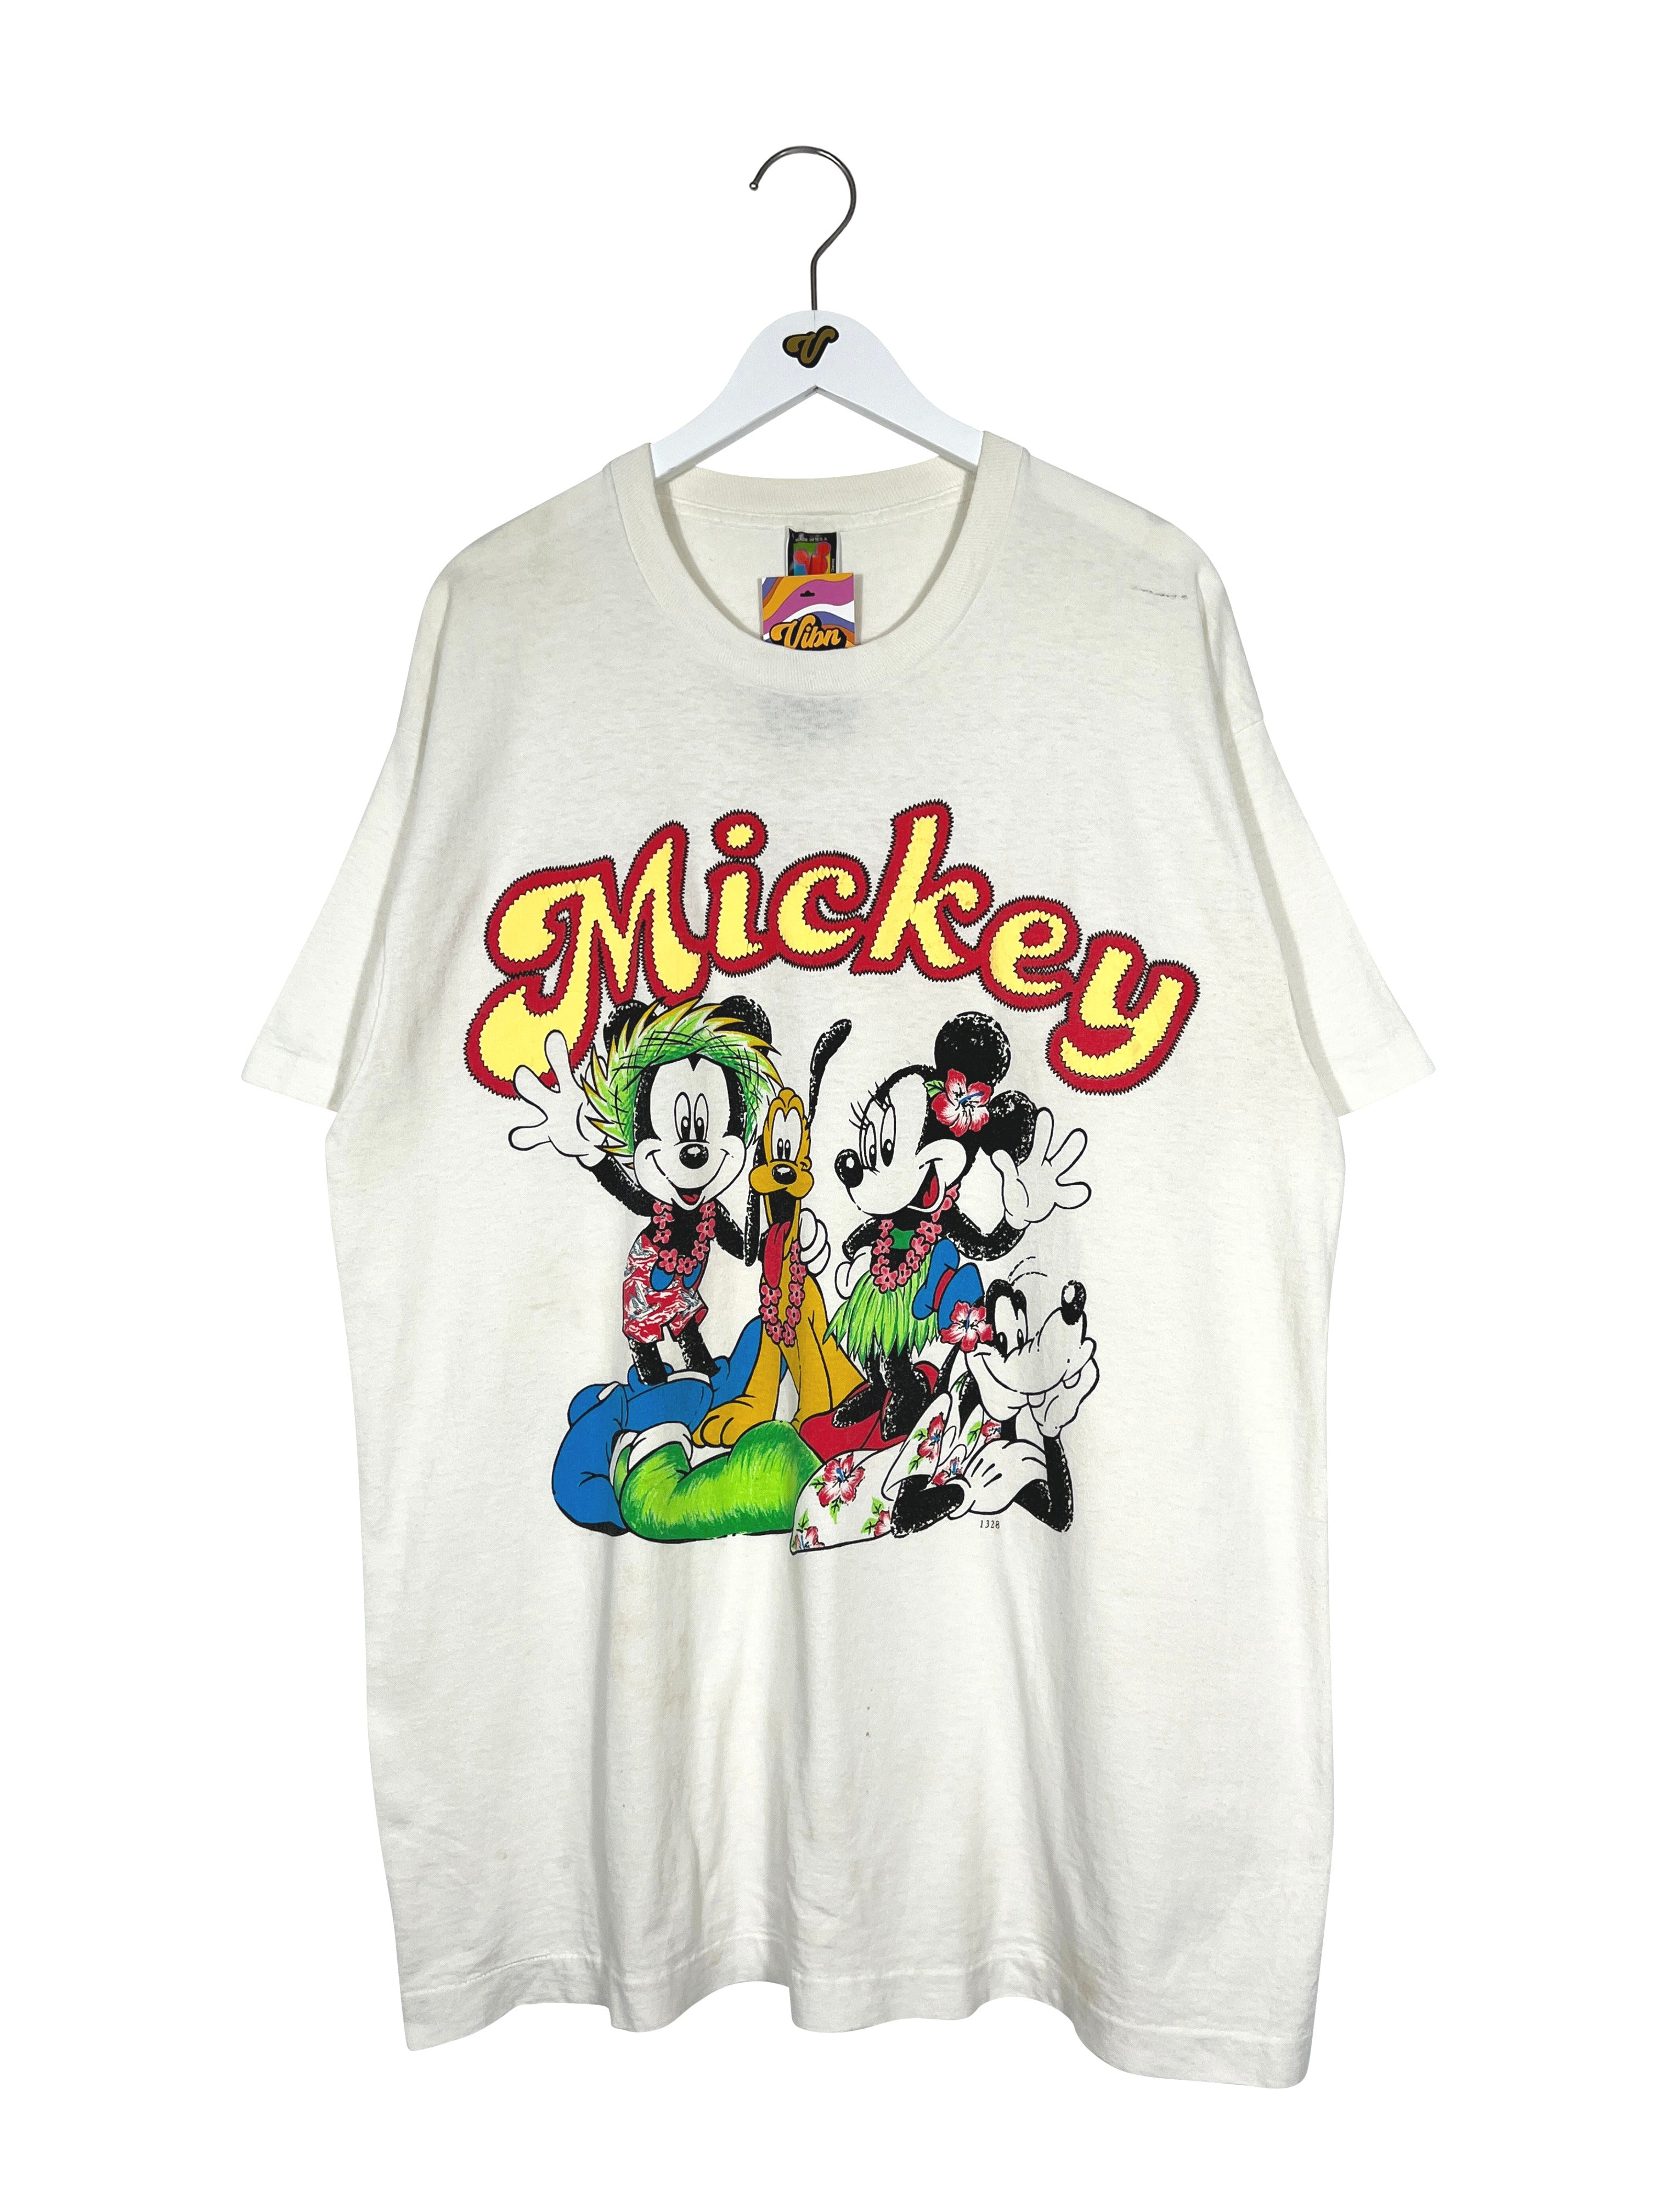 Vintage Disney Mickey Tshirt - Men's XL